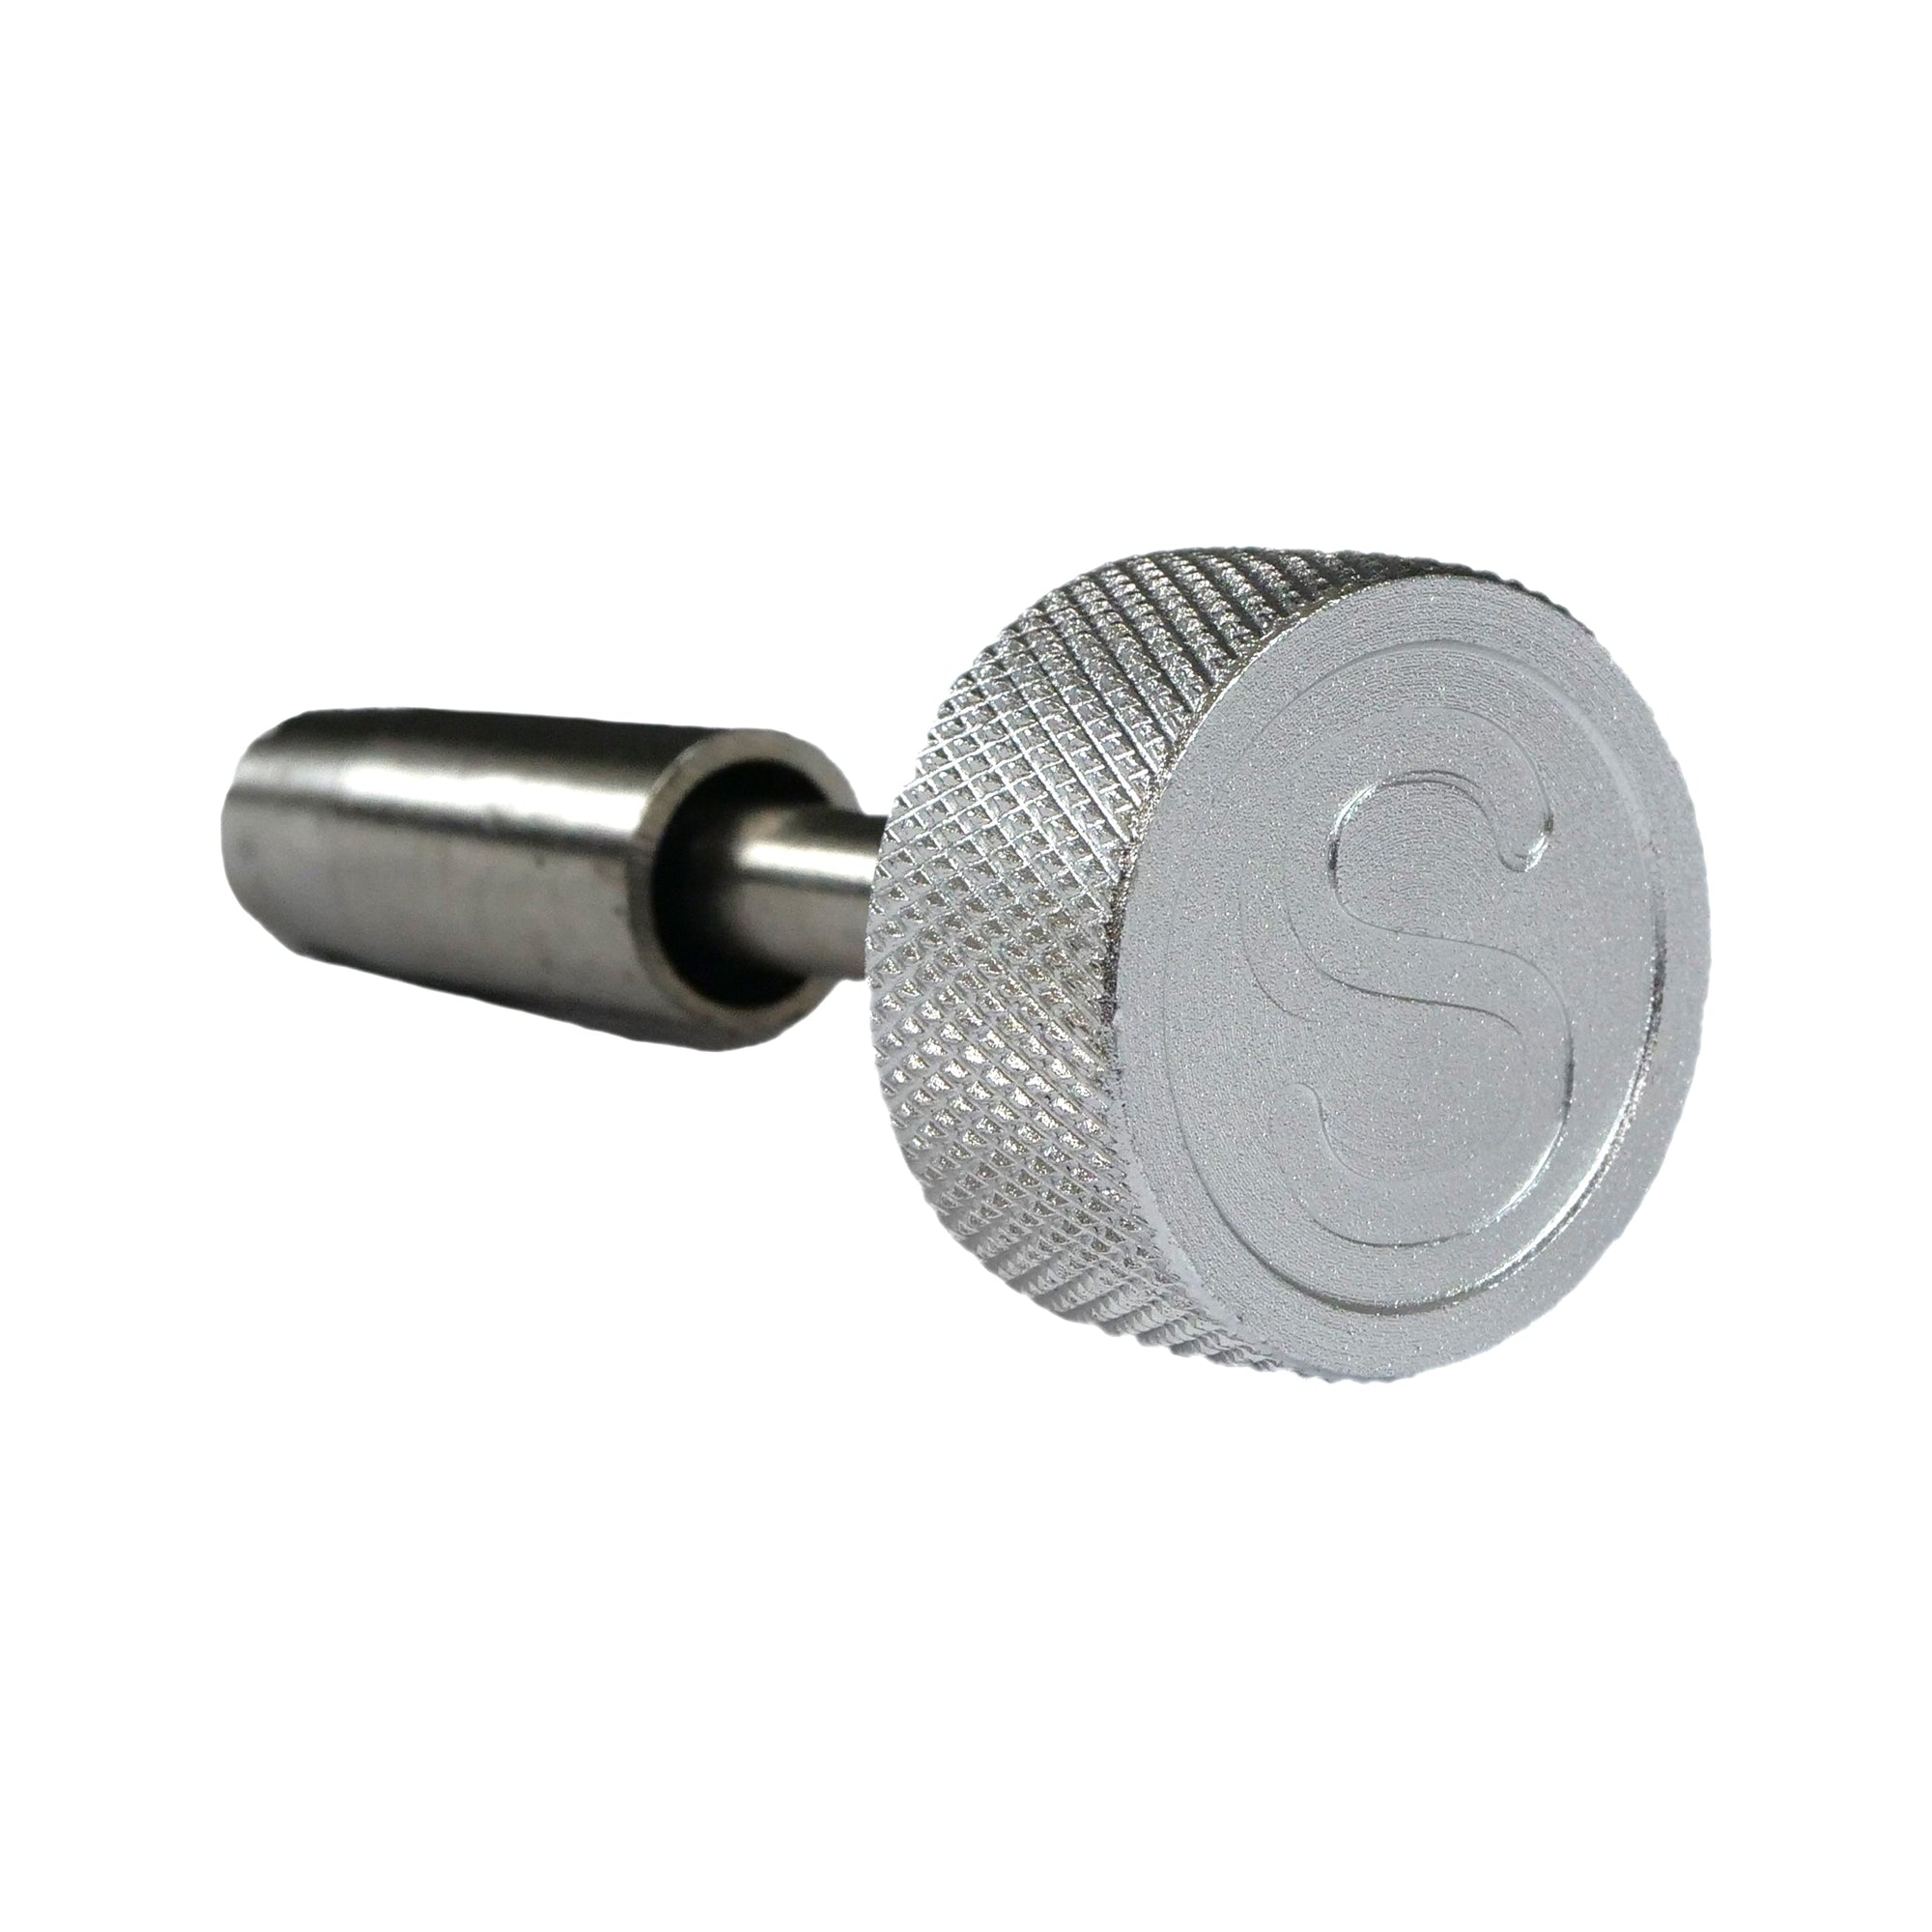 S-Knob Locking Pin